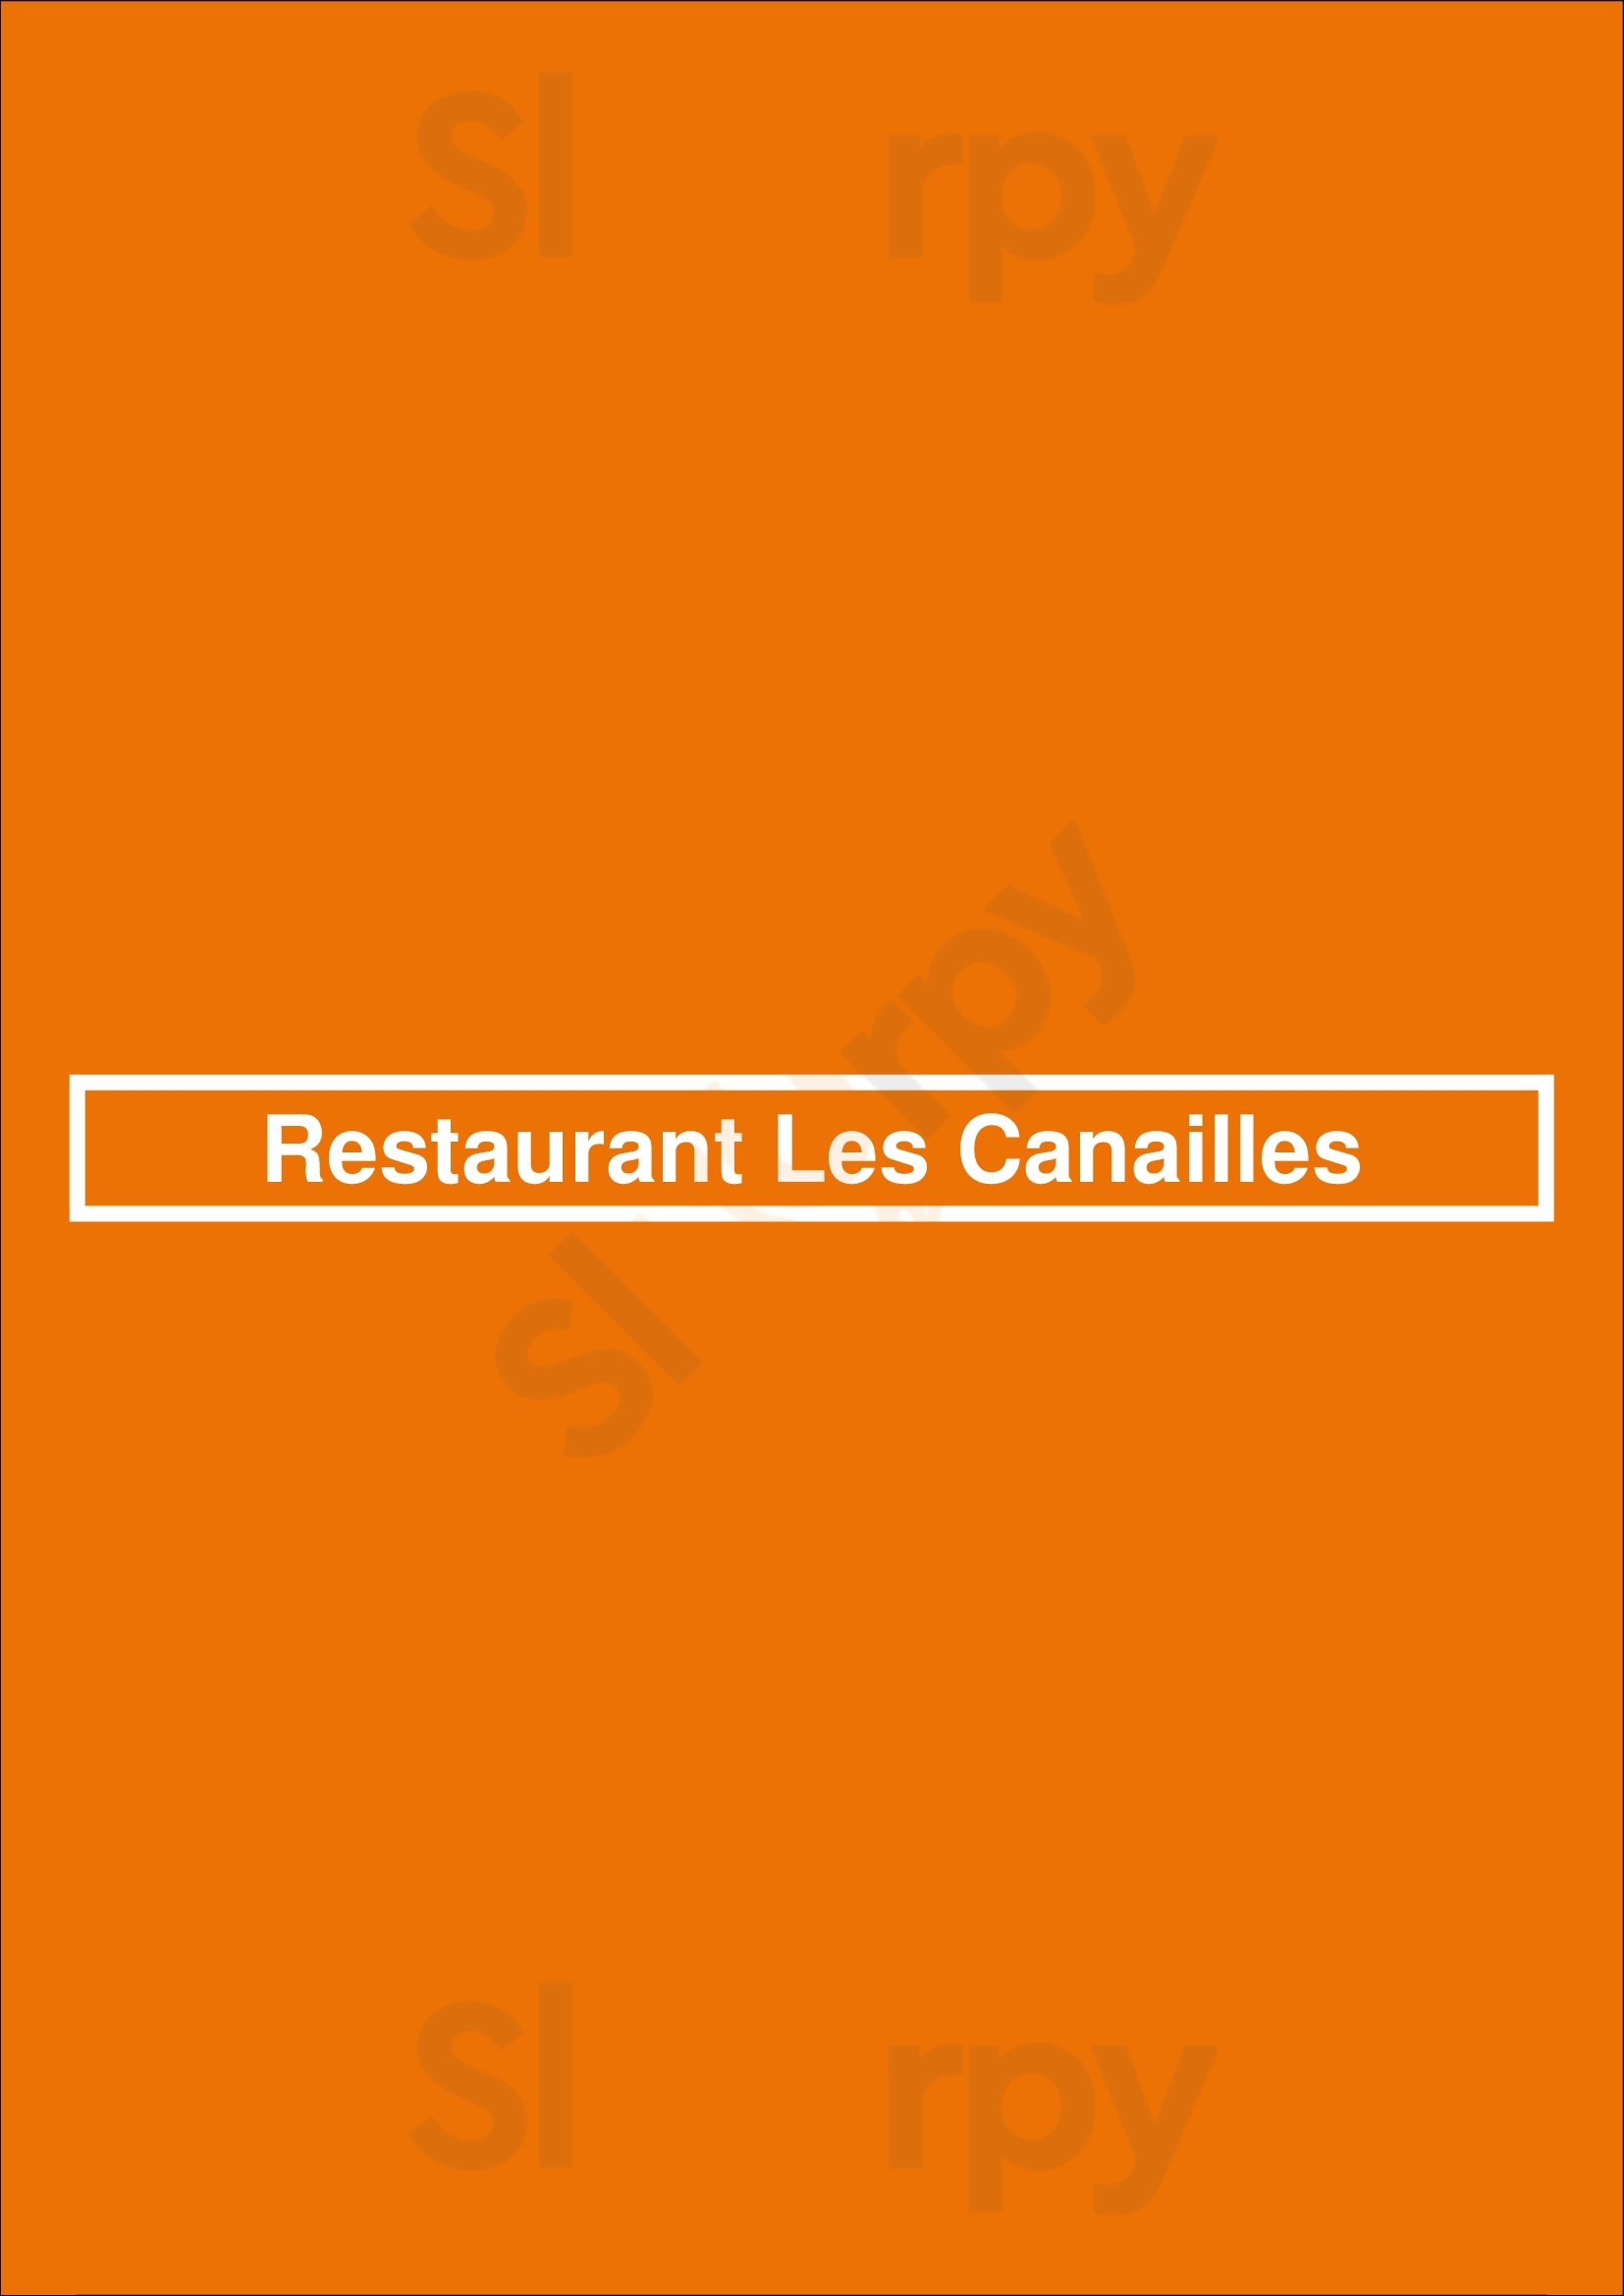 Restaurant Les Canailles Strasbourg Menu - 1